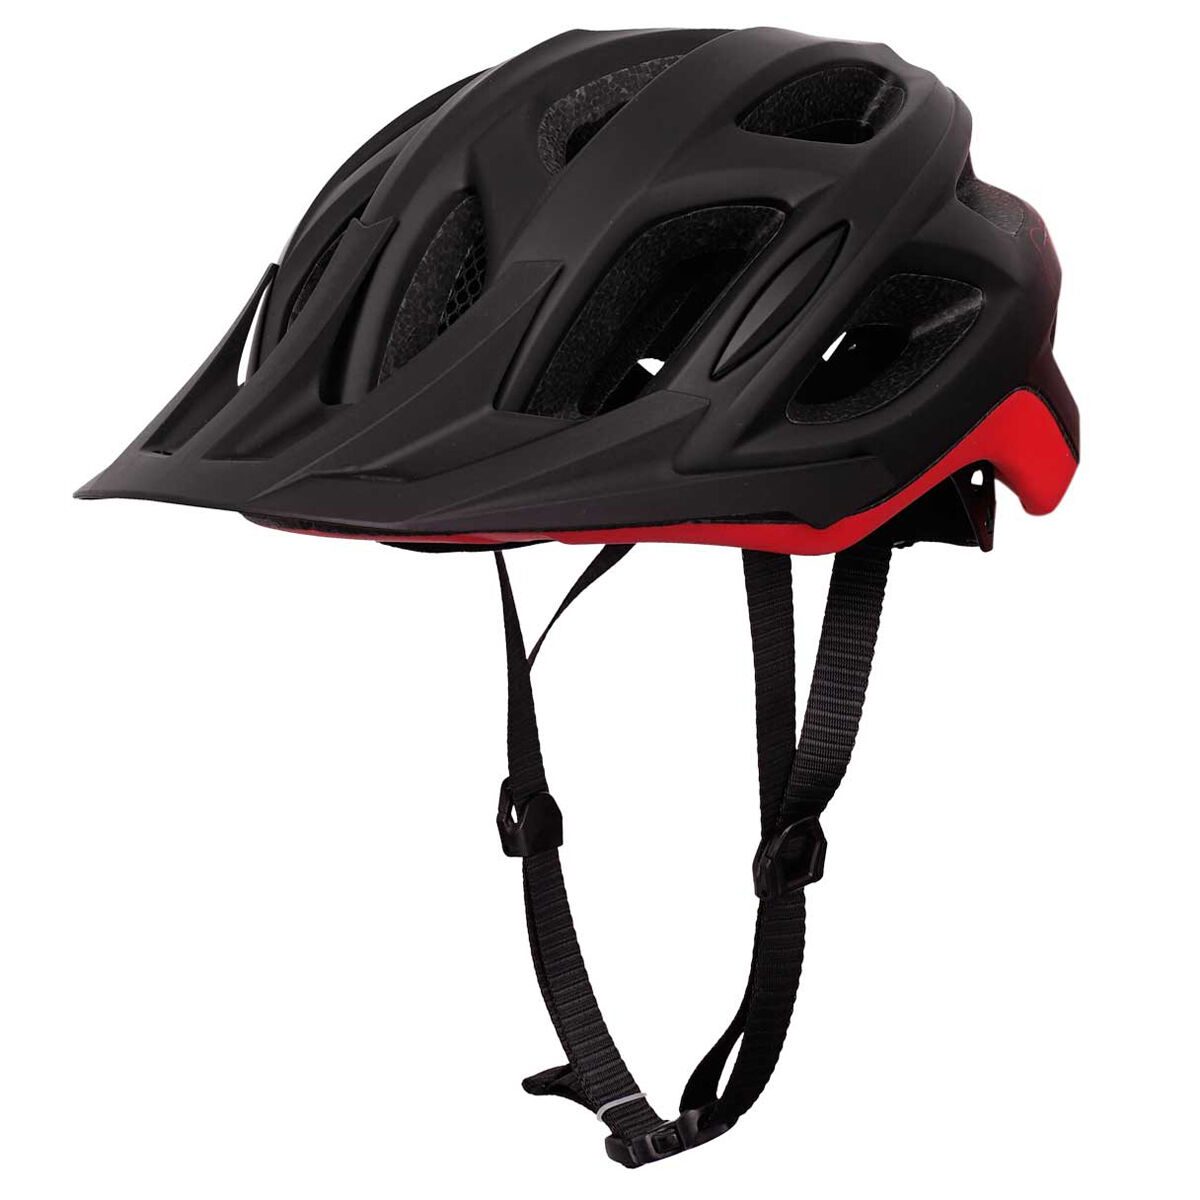 rebel bike helmets